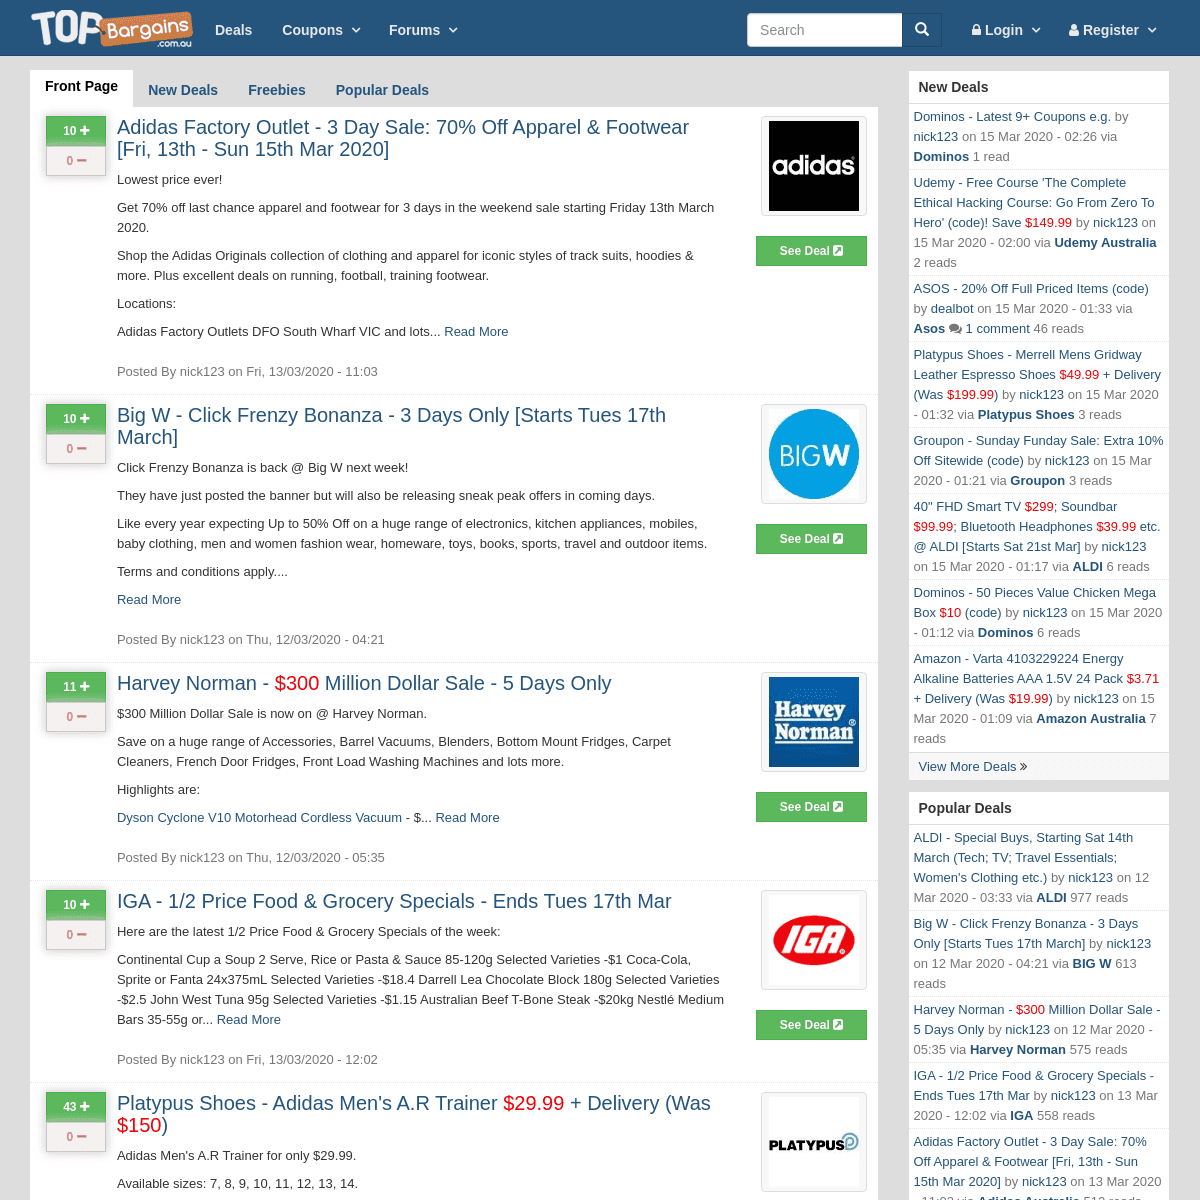 A complete backup of topbargains.com.au